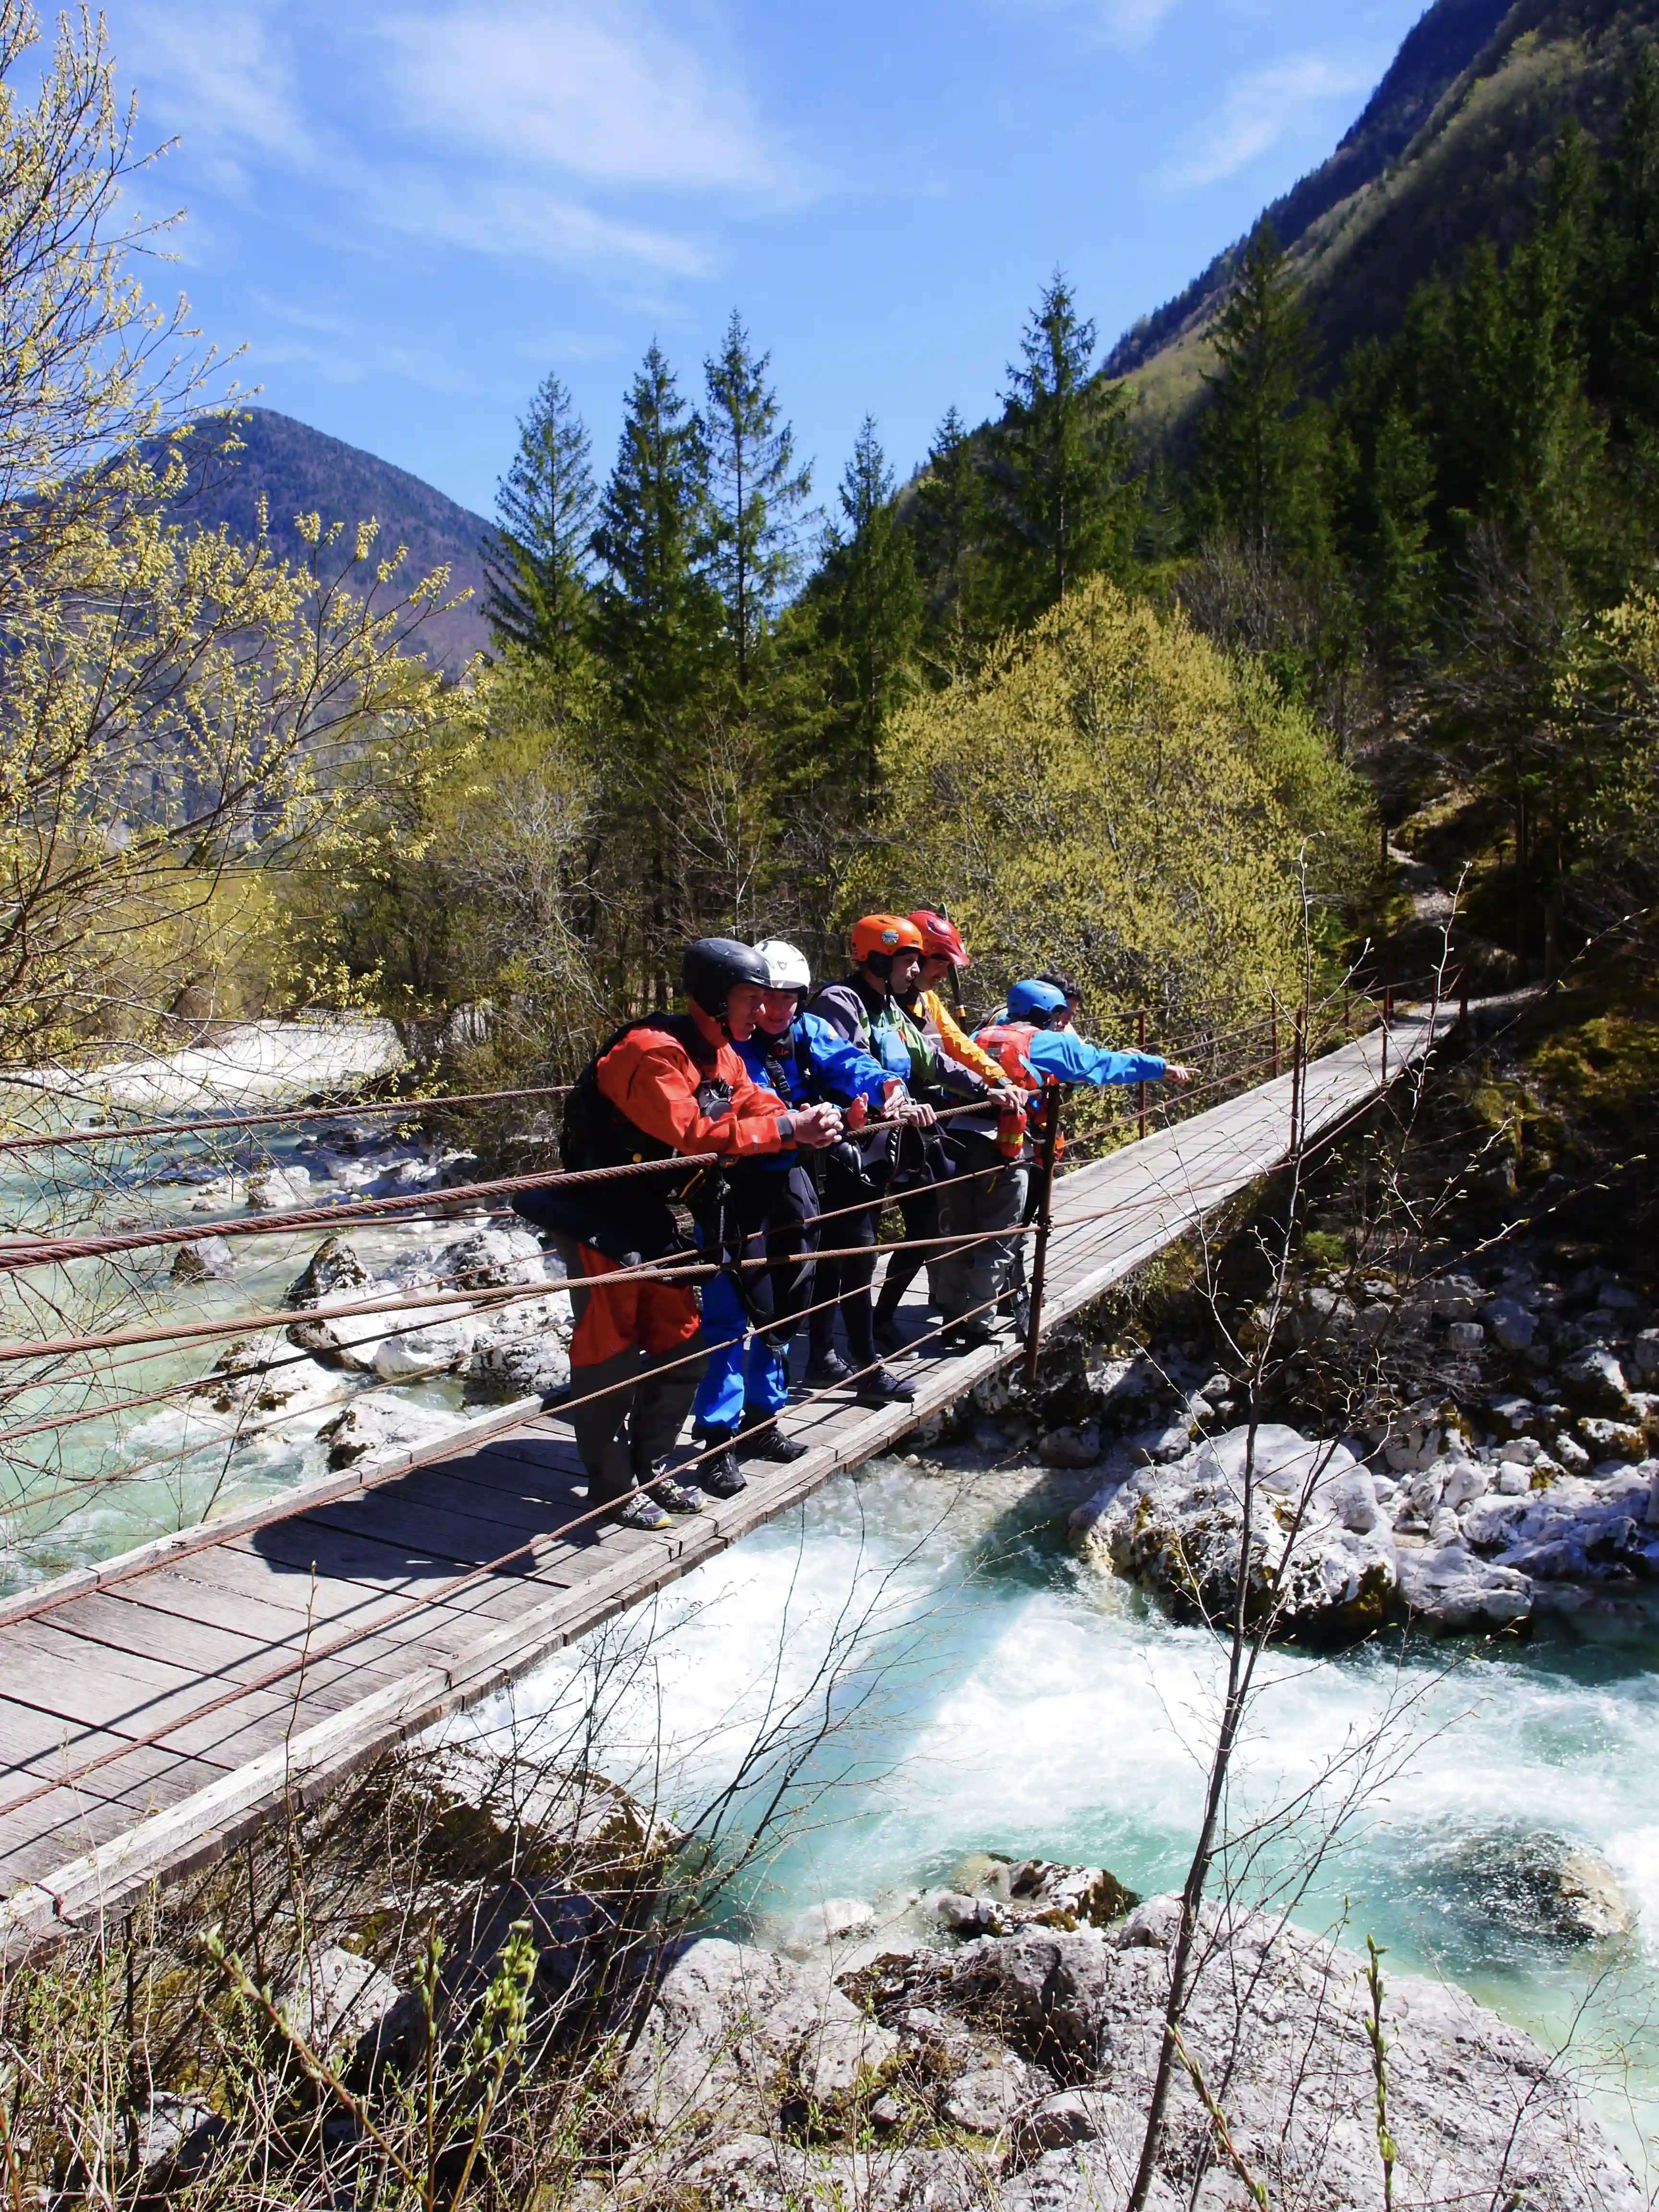 Scouting a rapid on a blue river bridge